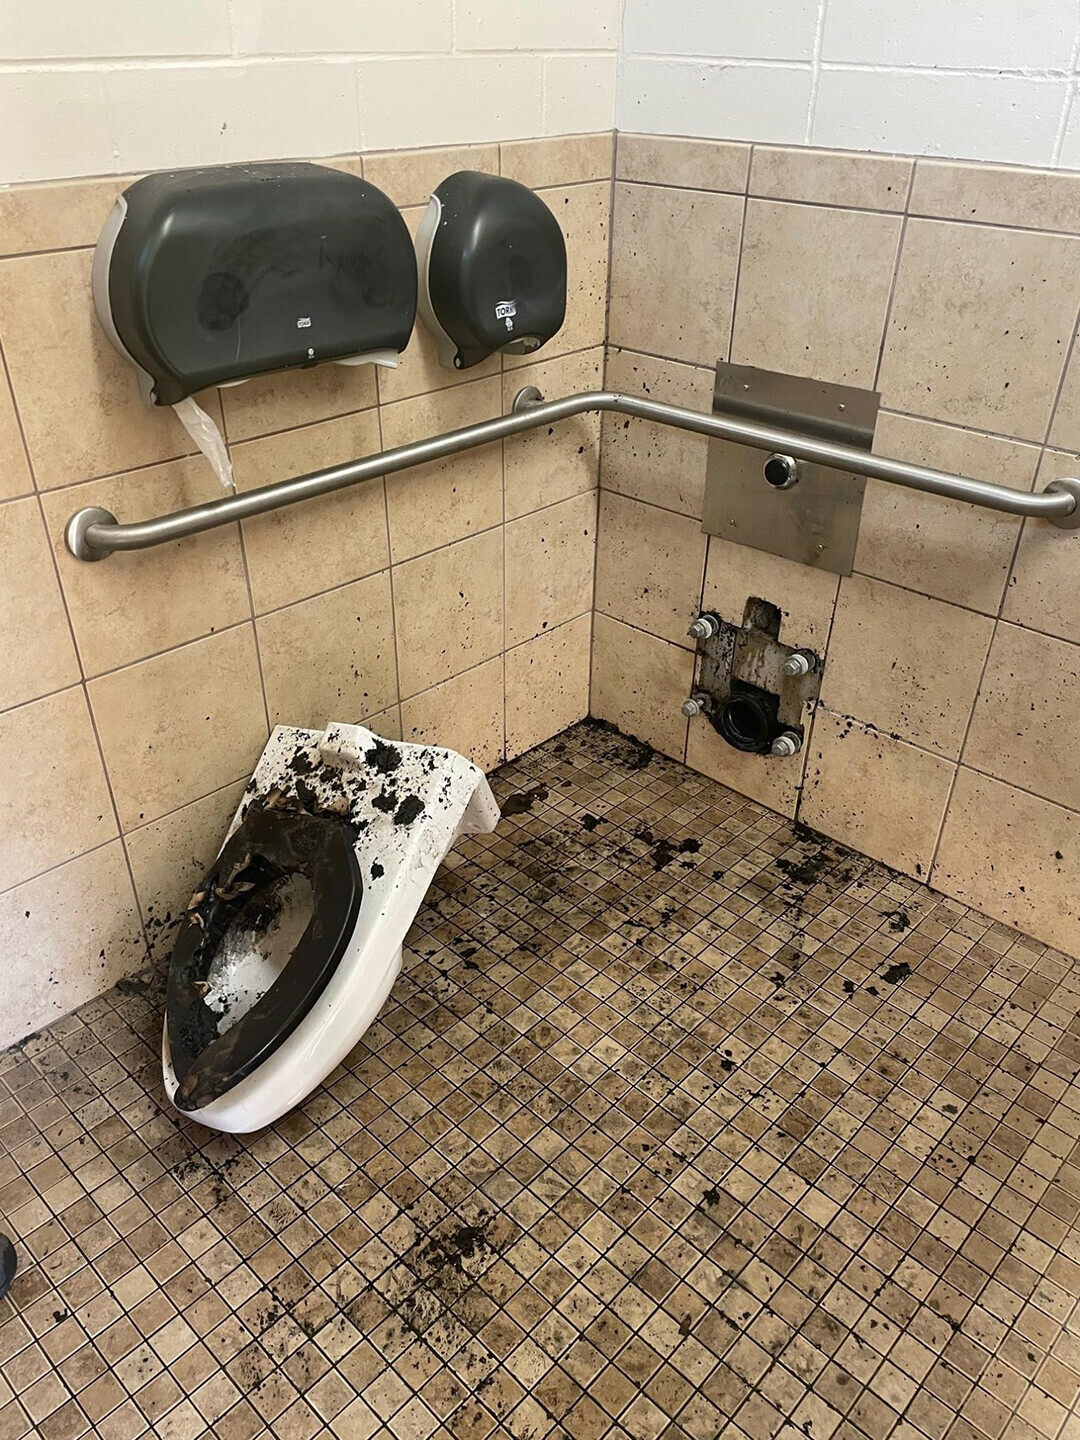 BONUS ANGER-INDUCING IMAGE: Vandals struck Phoenix Park's other restrooms, near the Farmers Market Pavilion, in August.